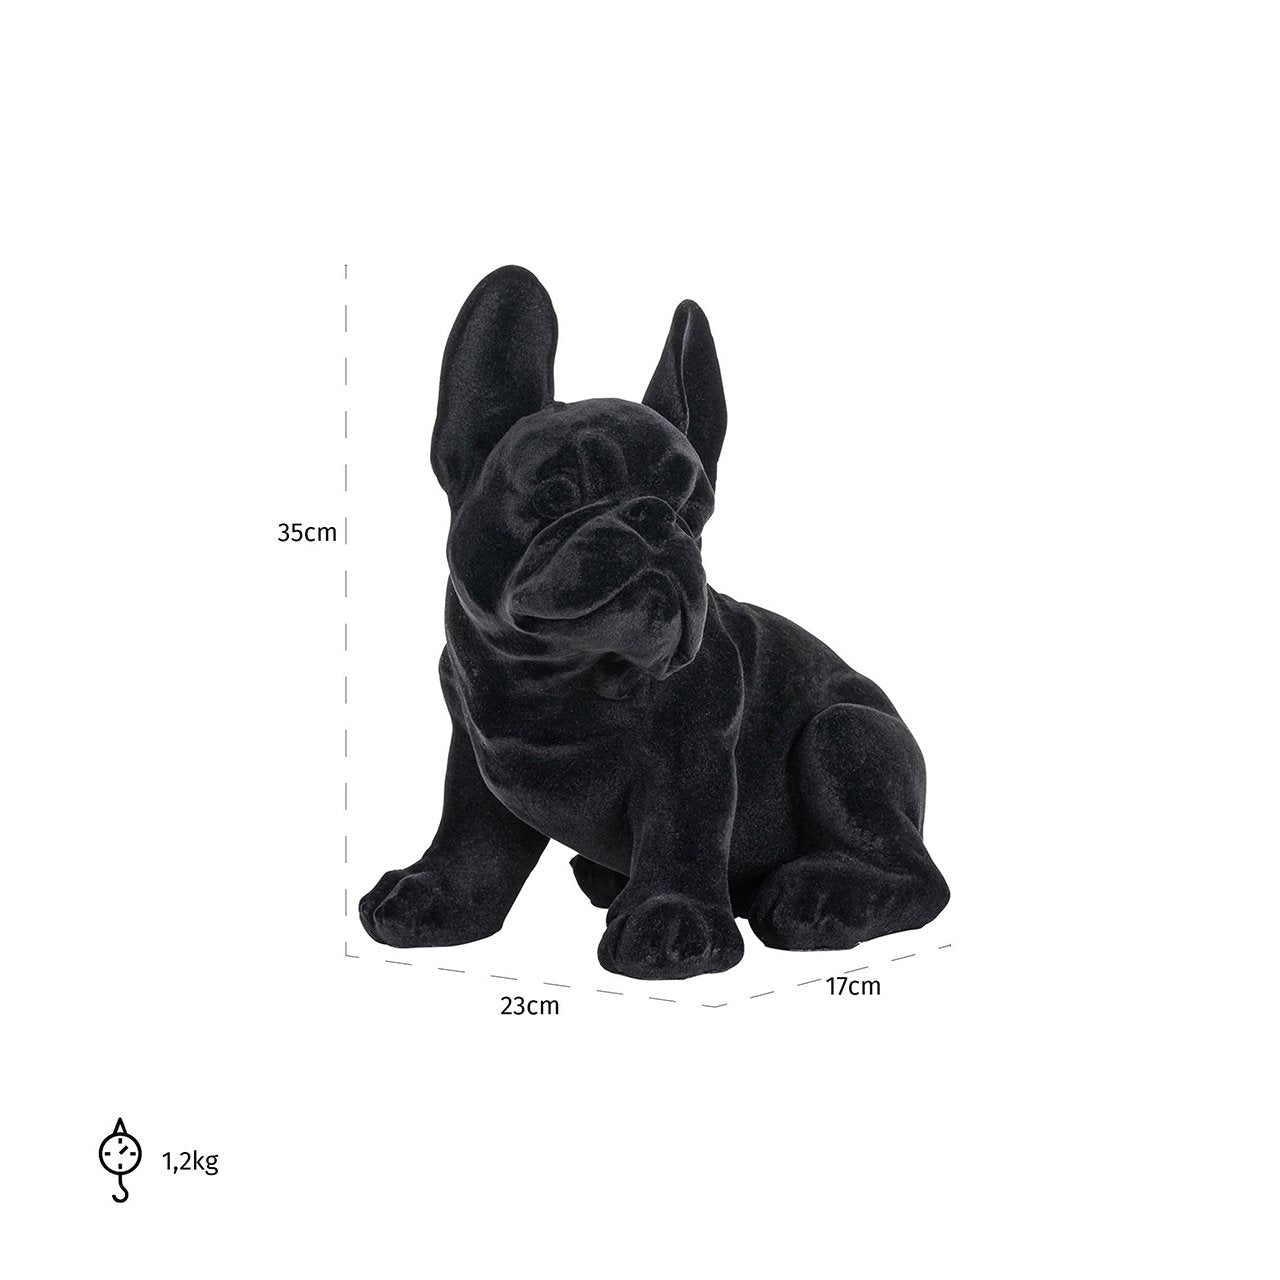 Maataanduiding: zwart franse bulldog puppy beeldje van Richmond Interiors 